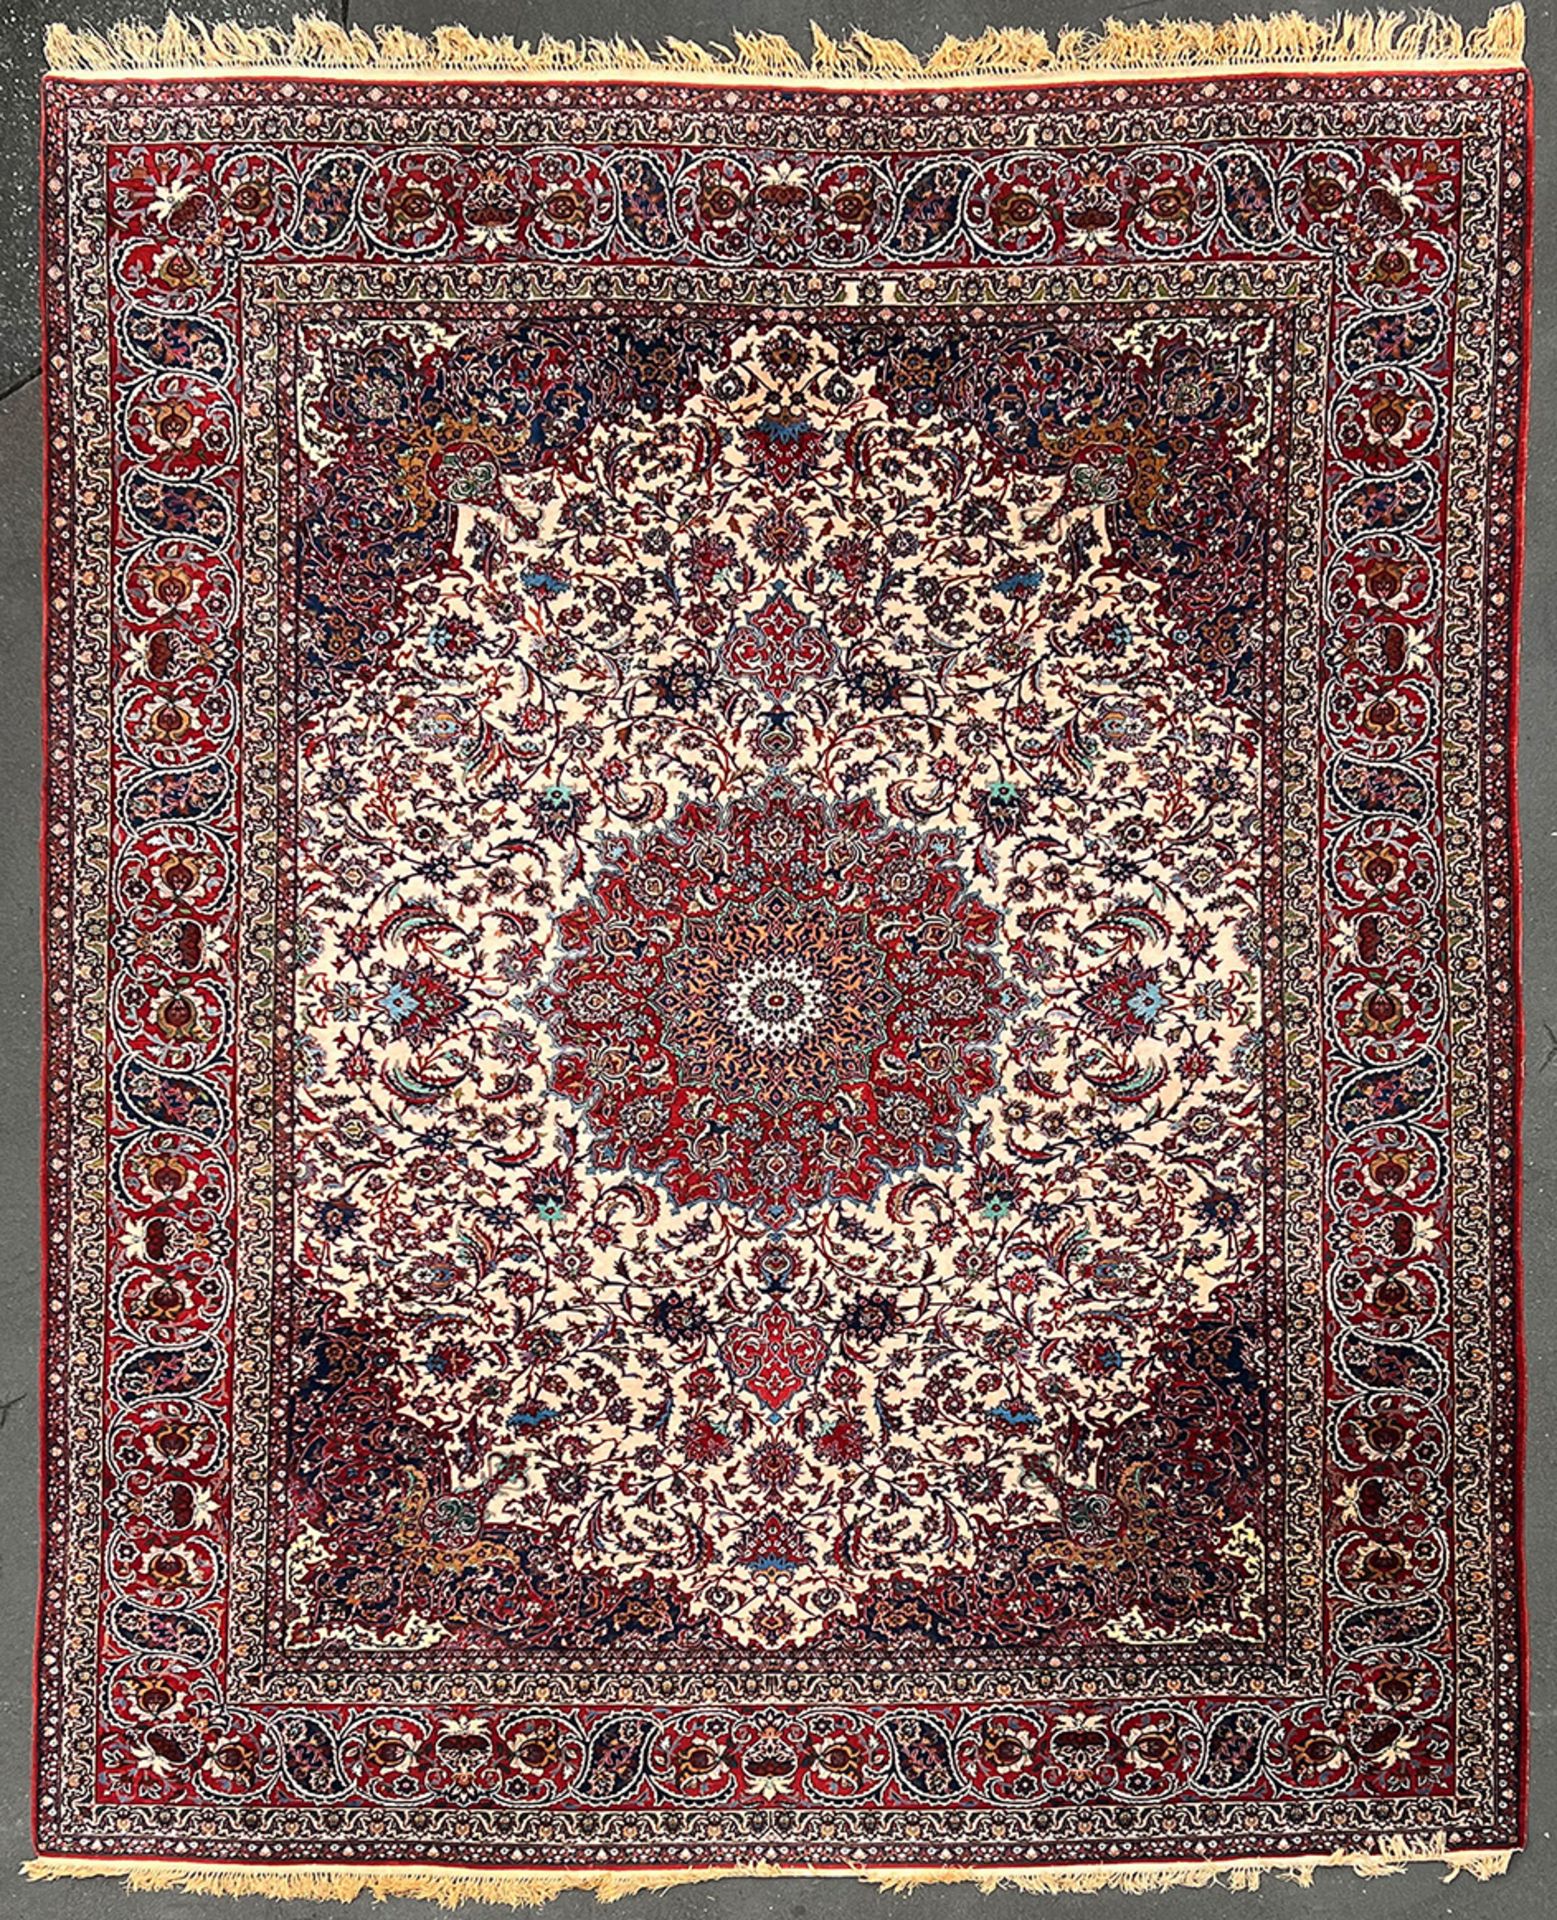 Orientteppich, Isfahan, Altersspuren, Fransen teils beschädigt, 308 x 422 cm